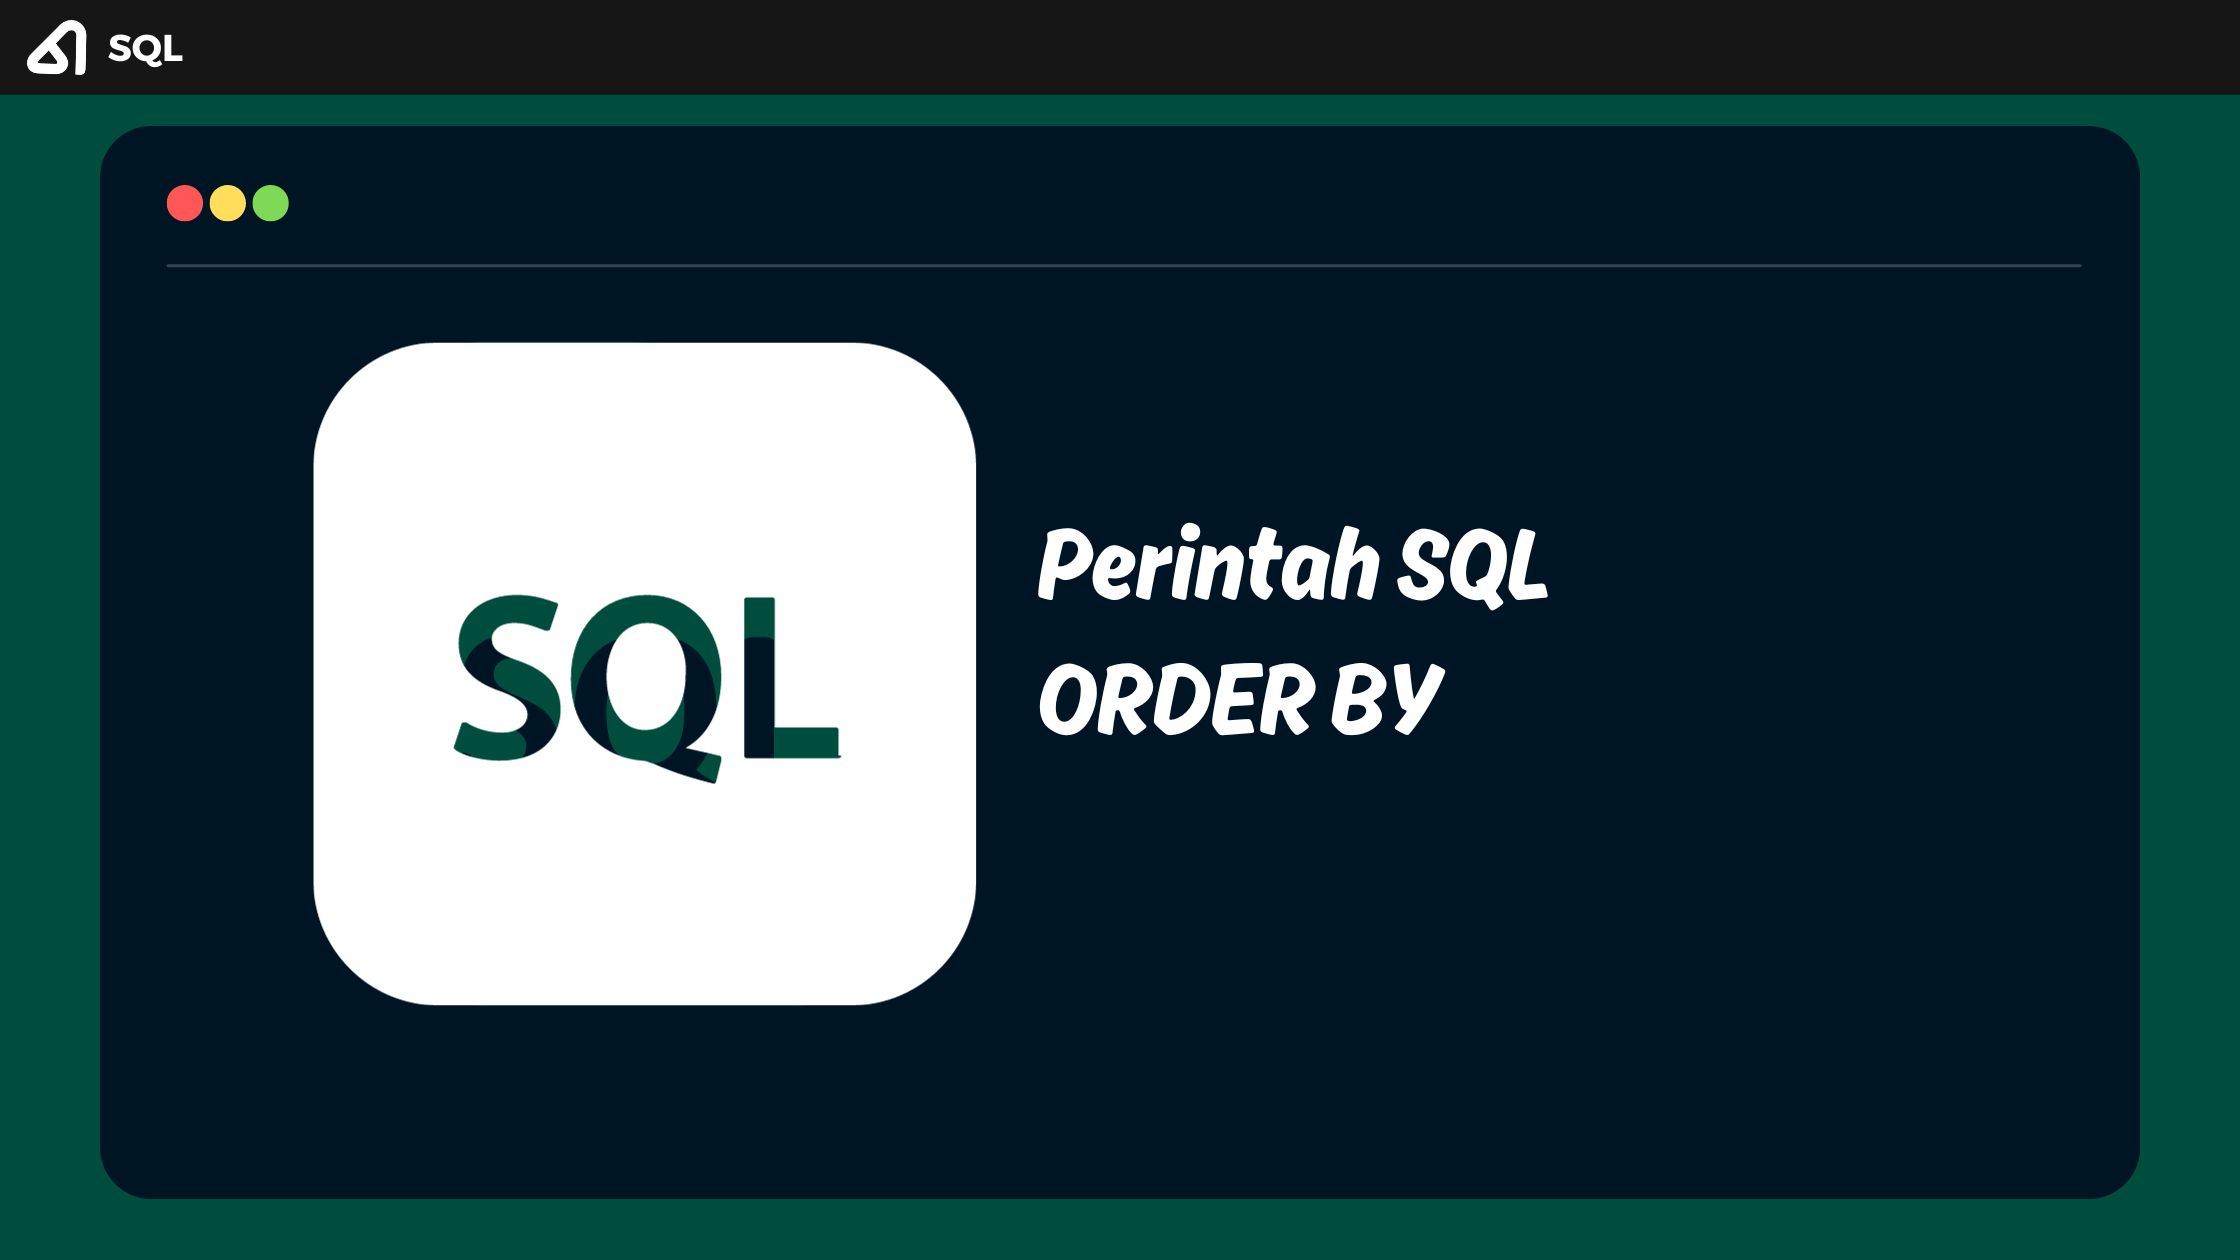 Perintah SQL ORDER BY